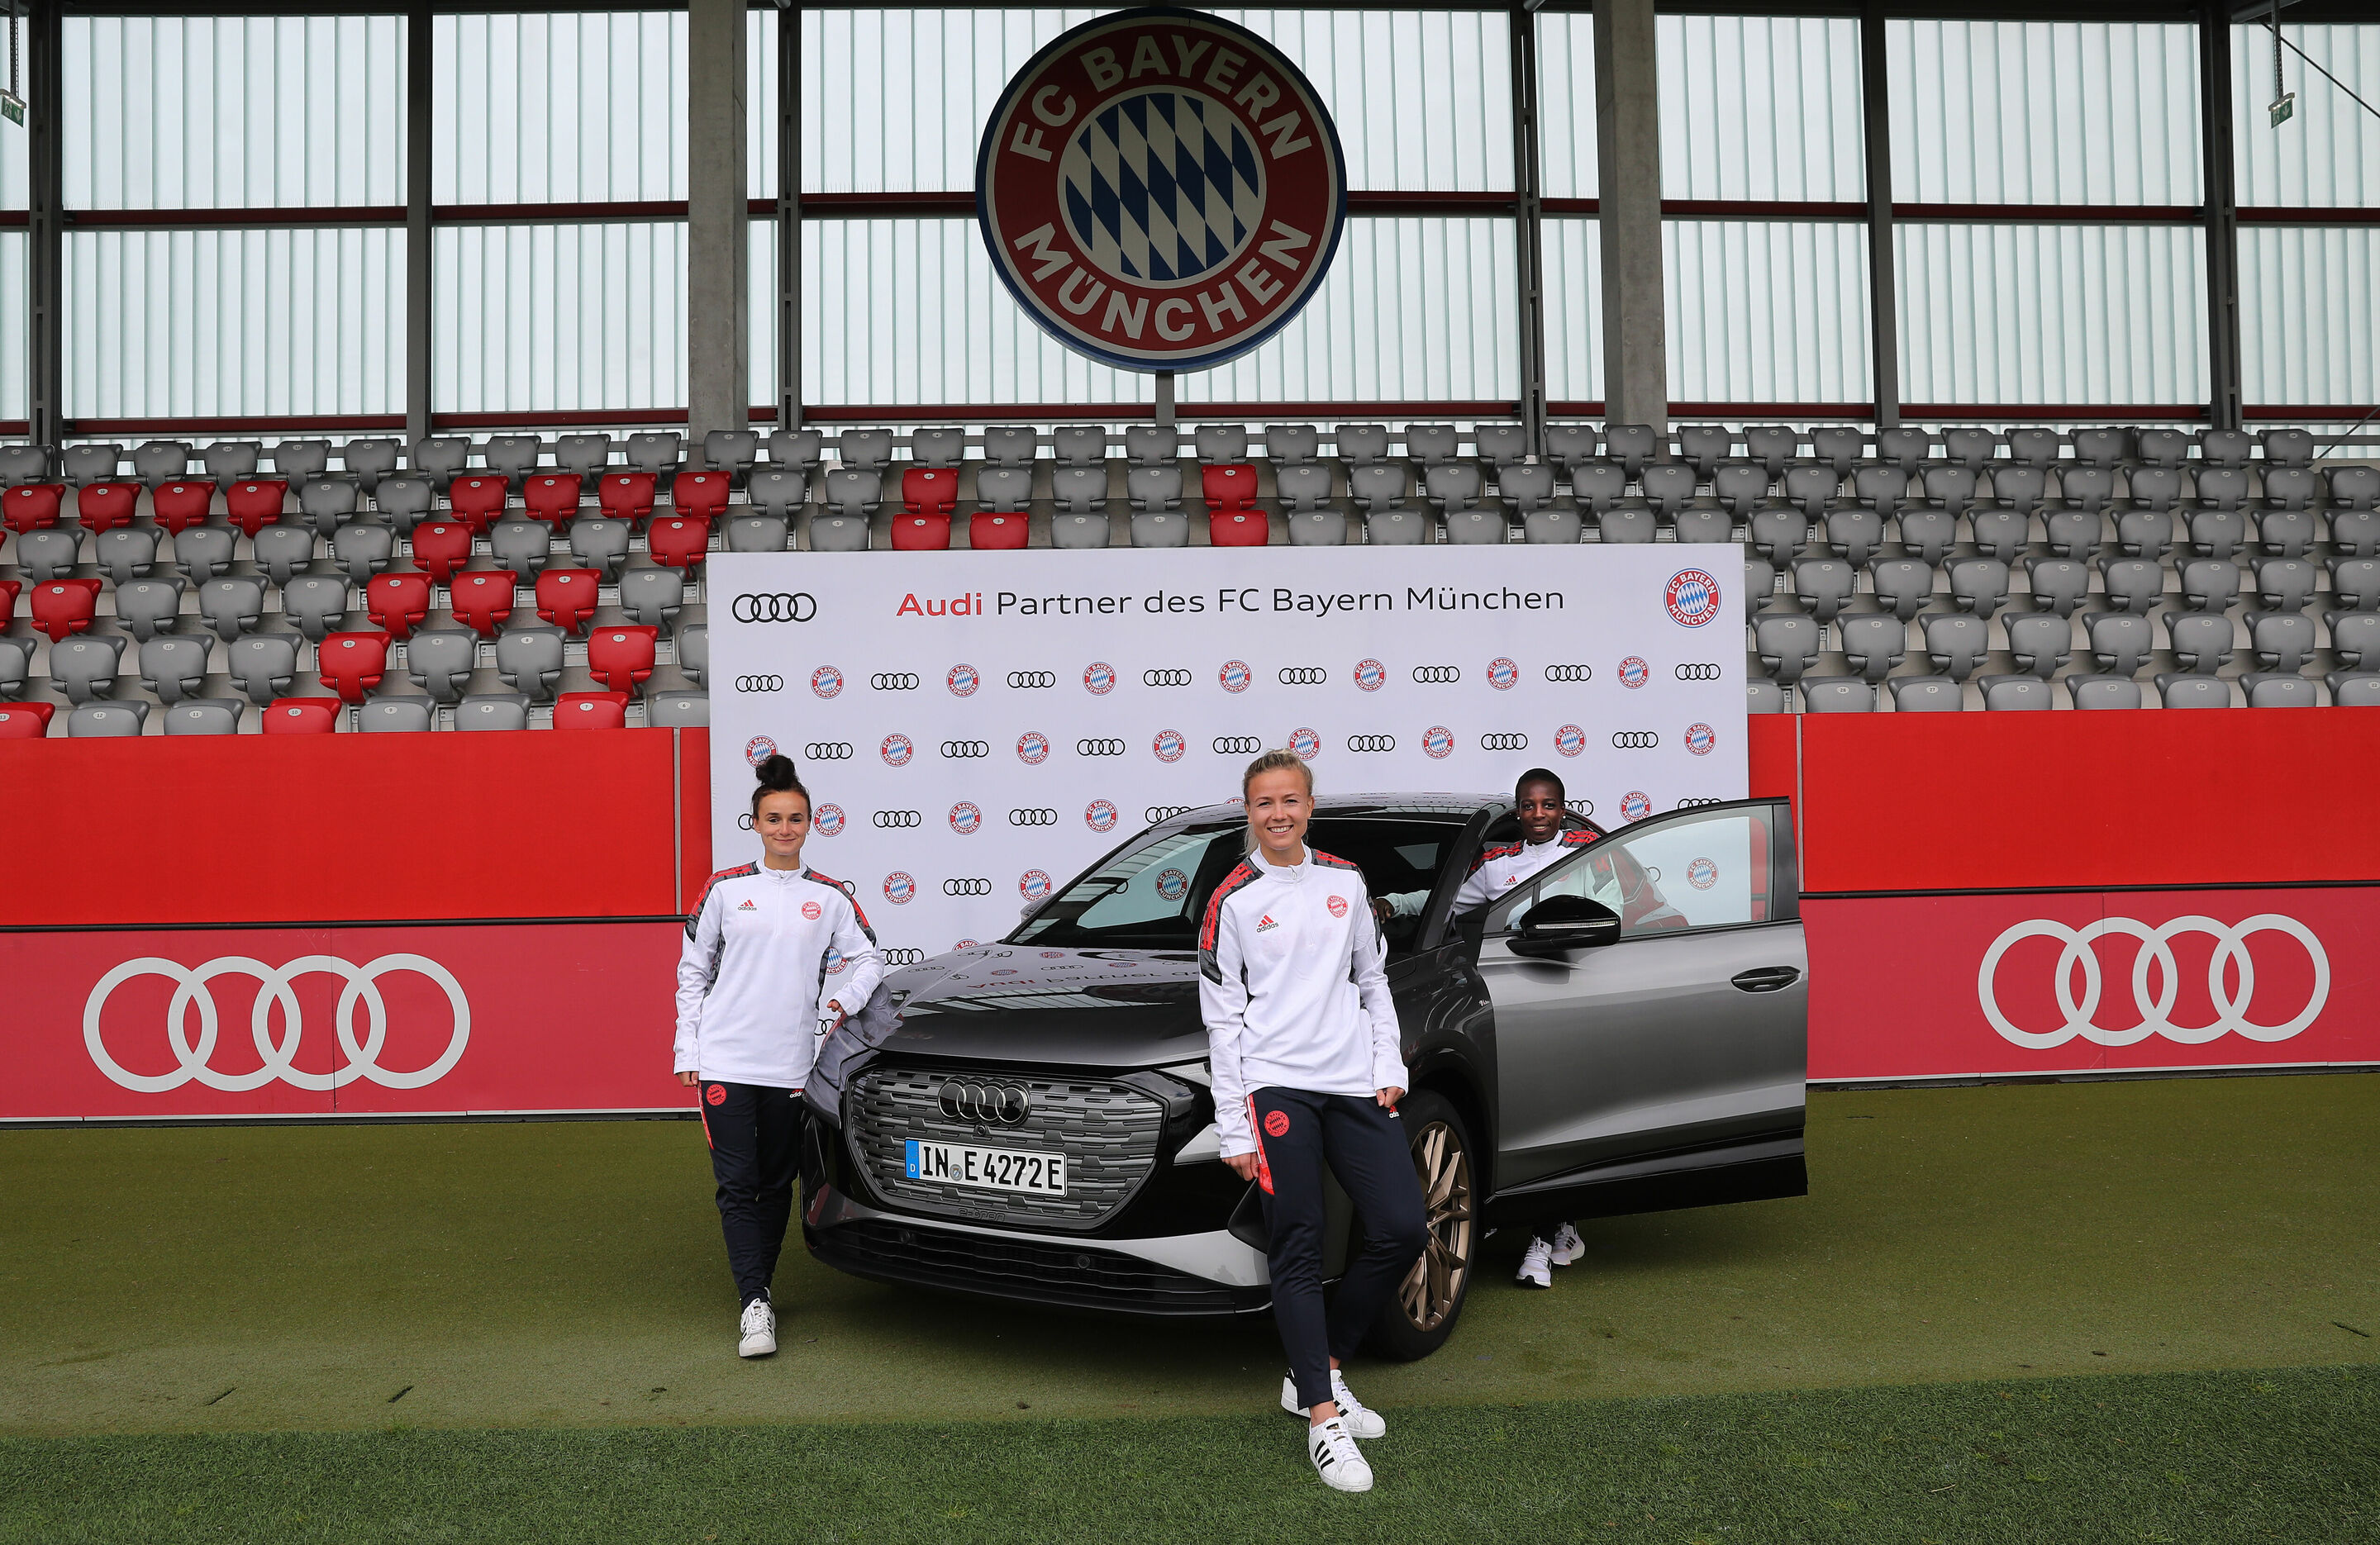 Audi becomes a partner of women’s soccer at FC Bayern Munich